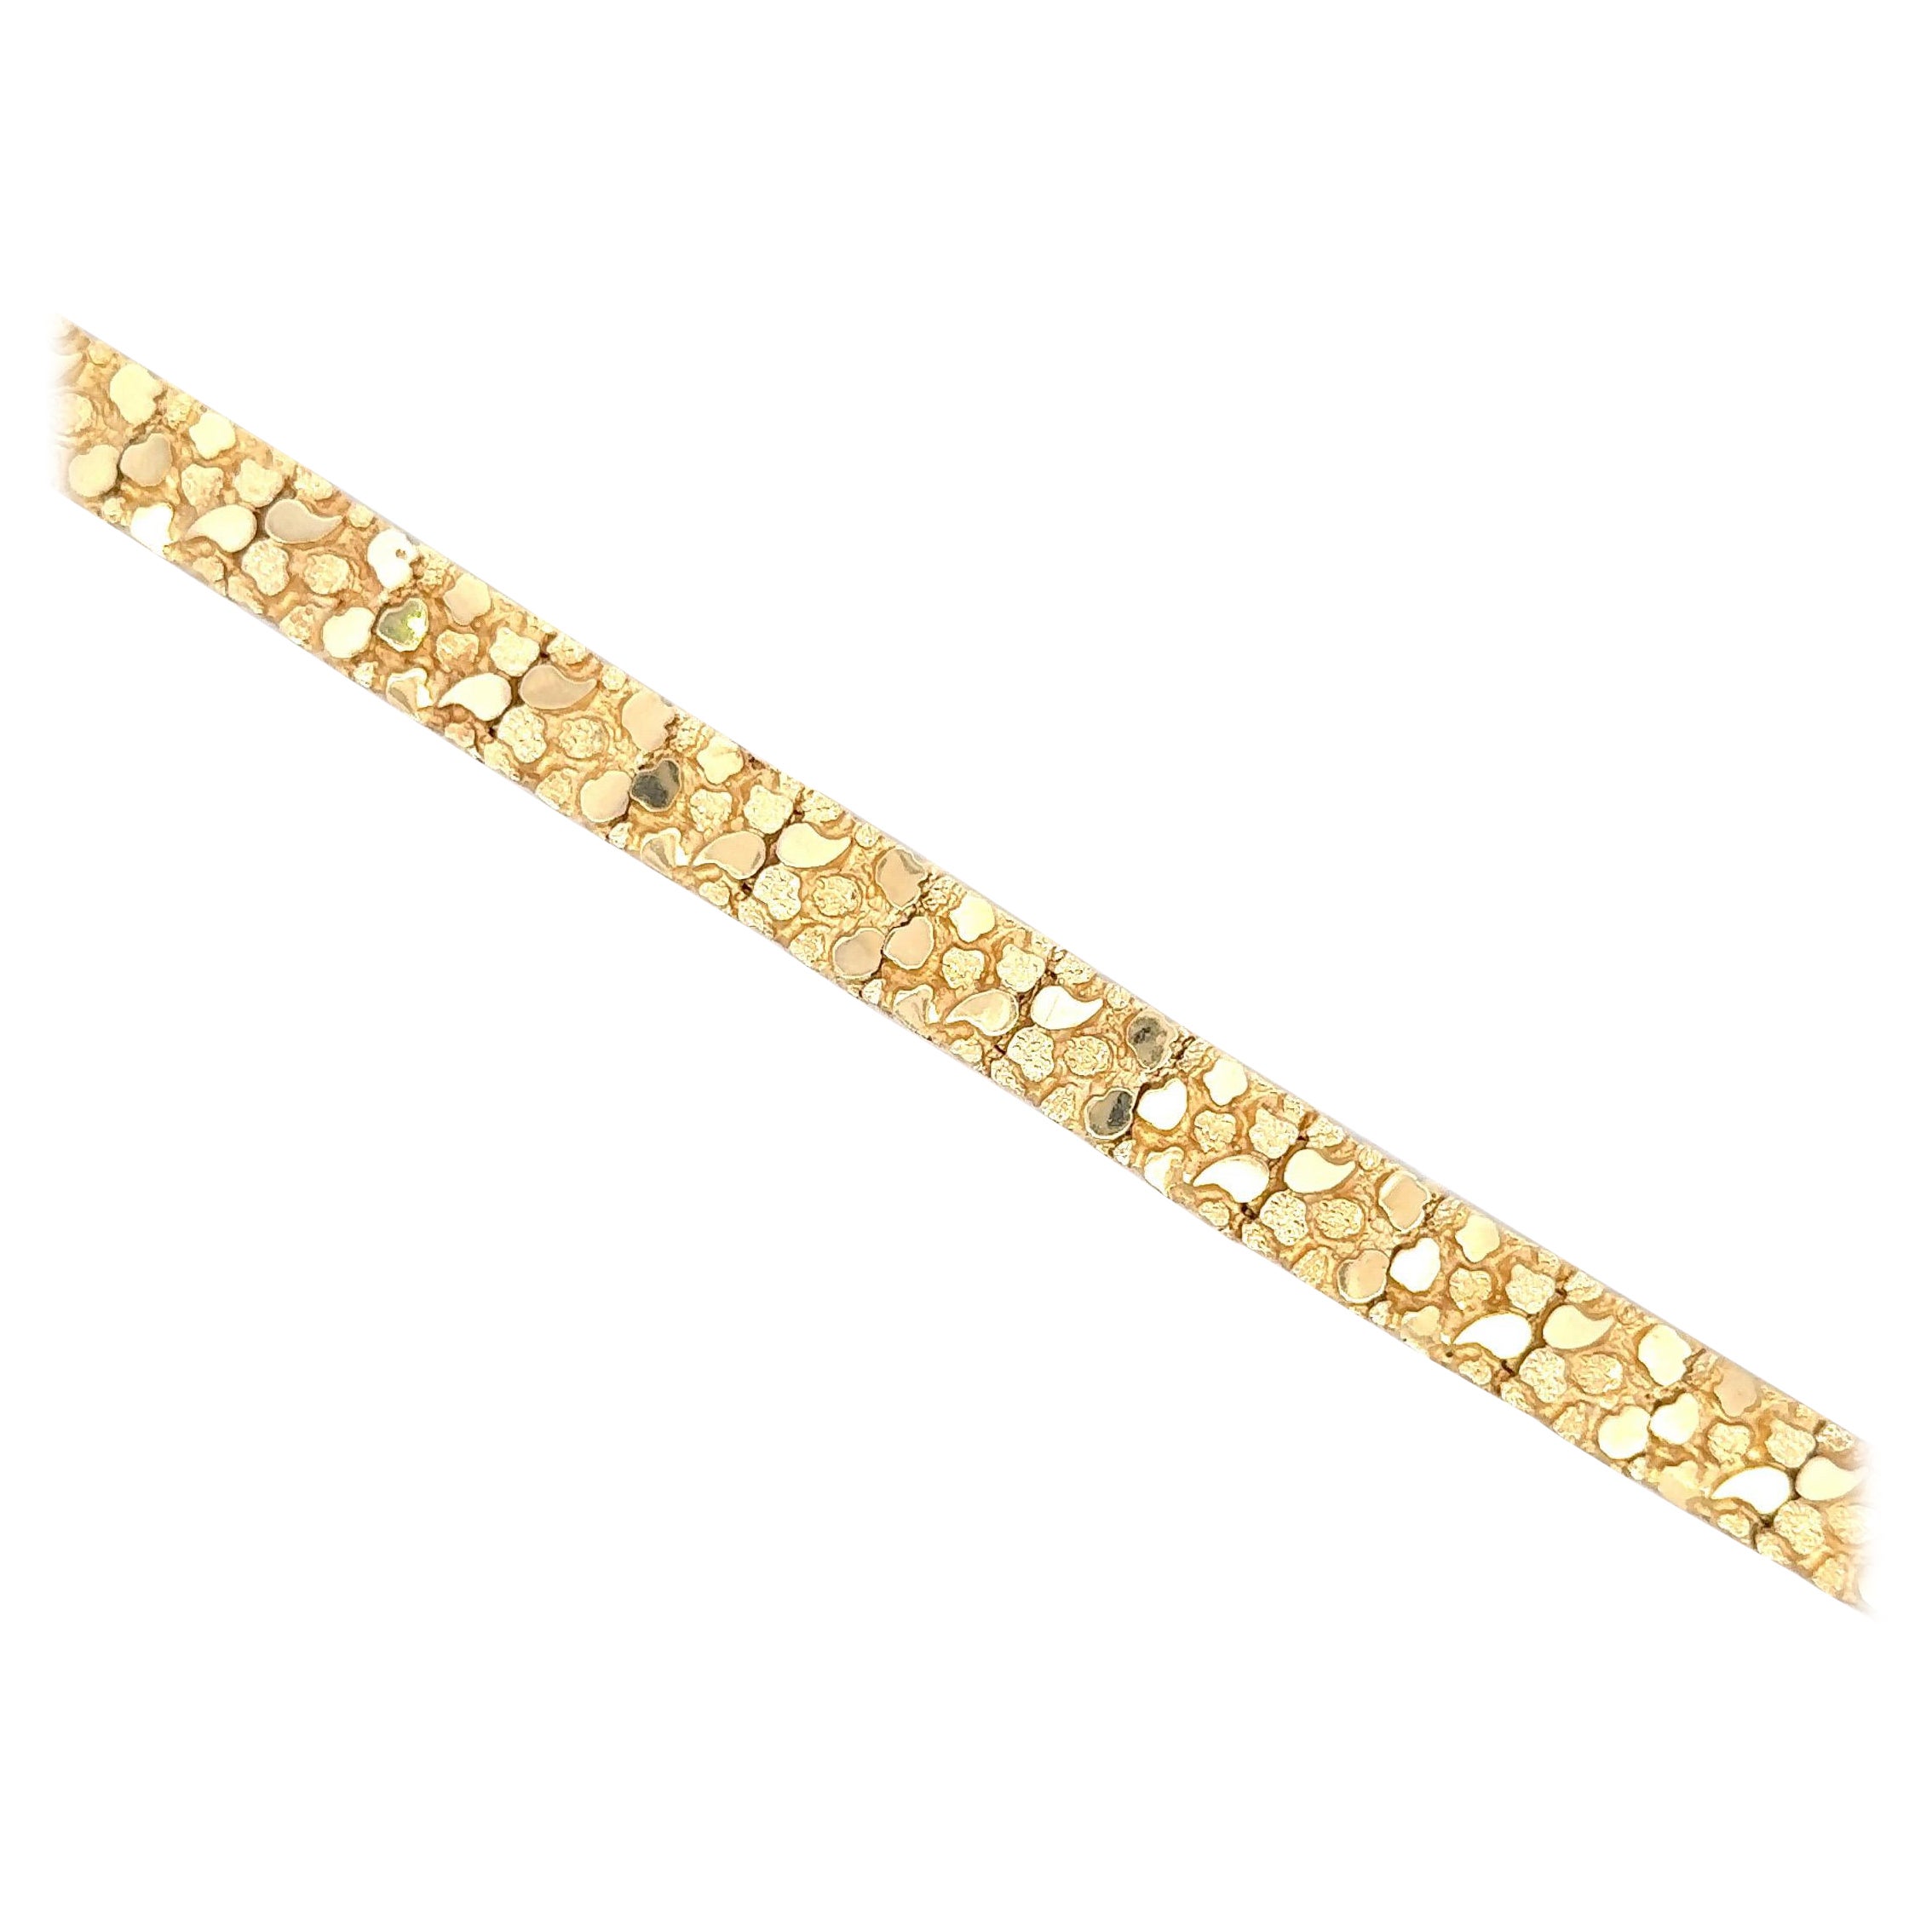 Textured & High Polished Stone Motif Bracelet 27.4 Grams 14 Karat Yellow Gold  For Sale